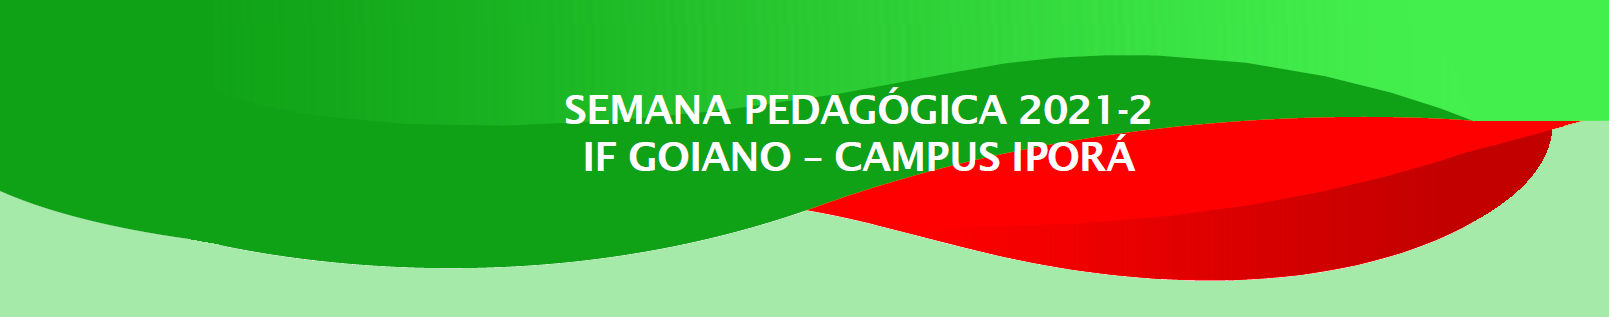 Semana Pedagógica 2021-2 - Campus Iporá